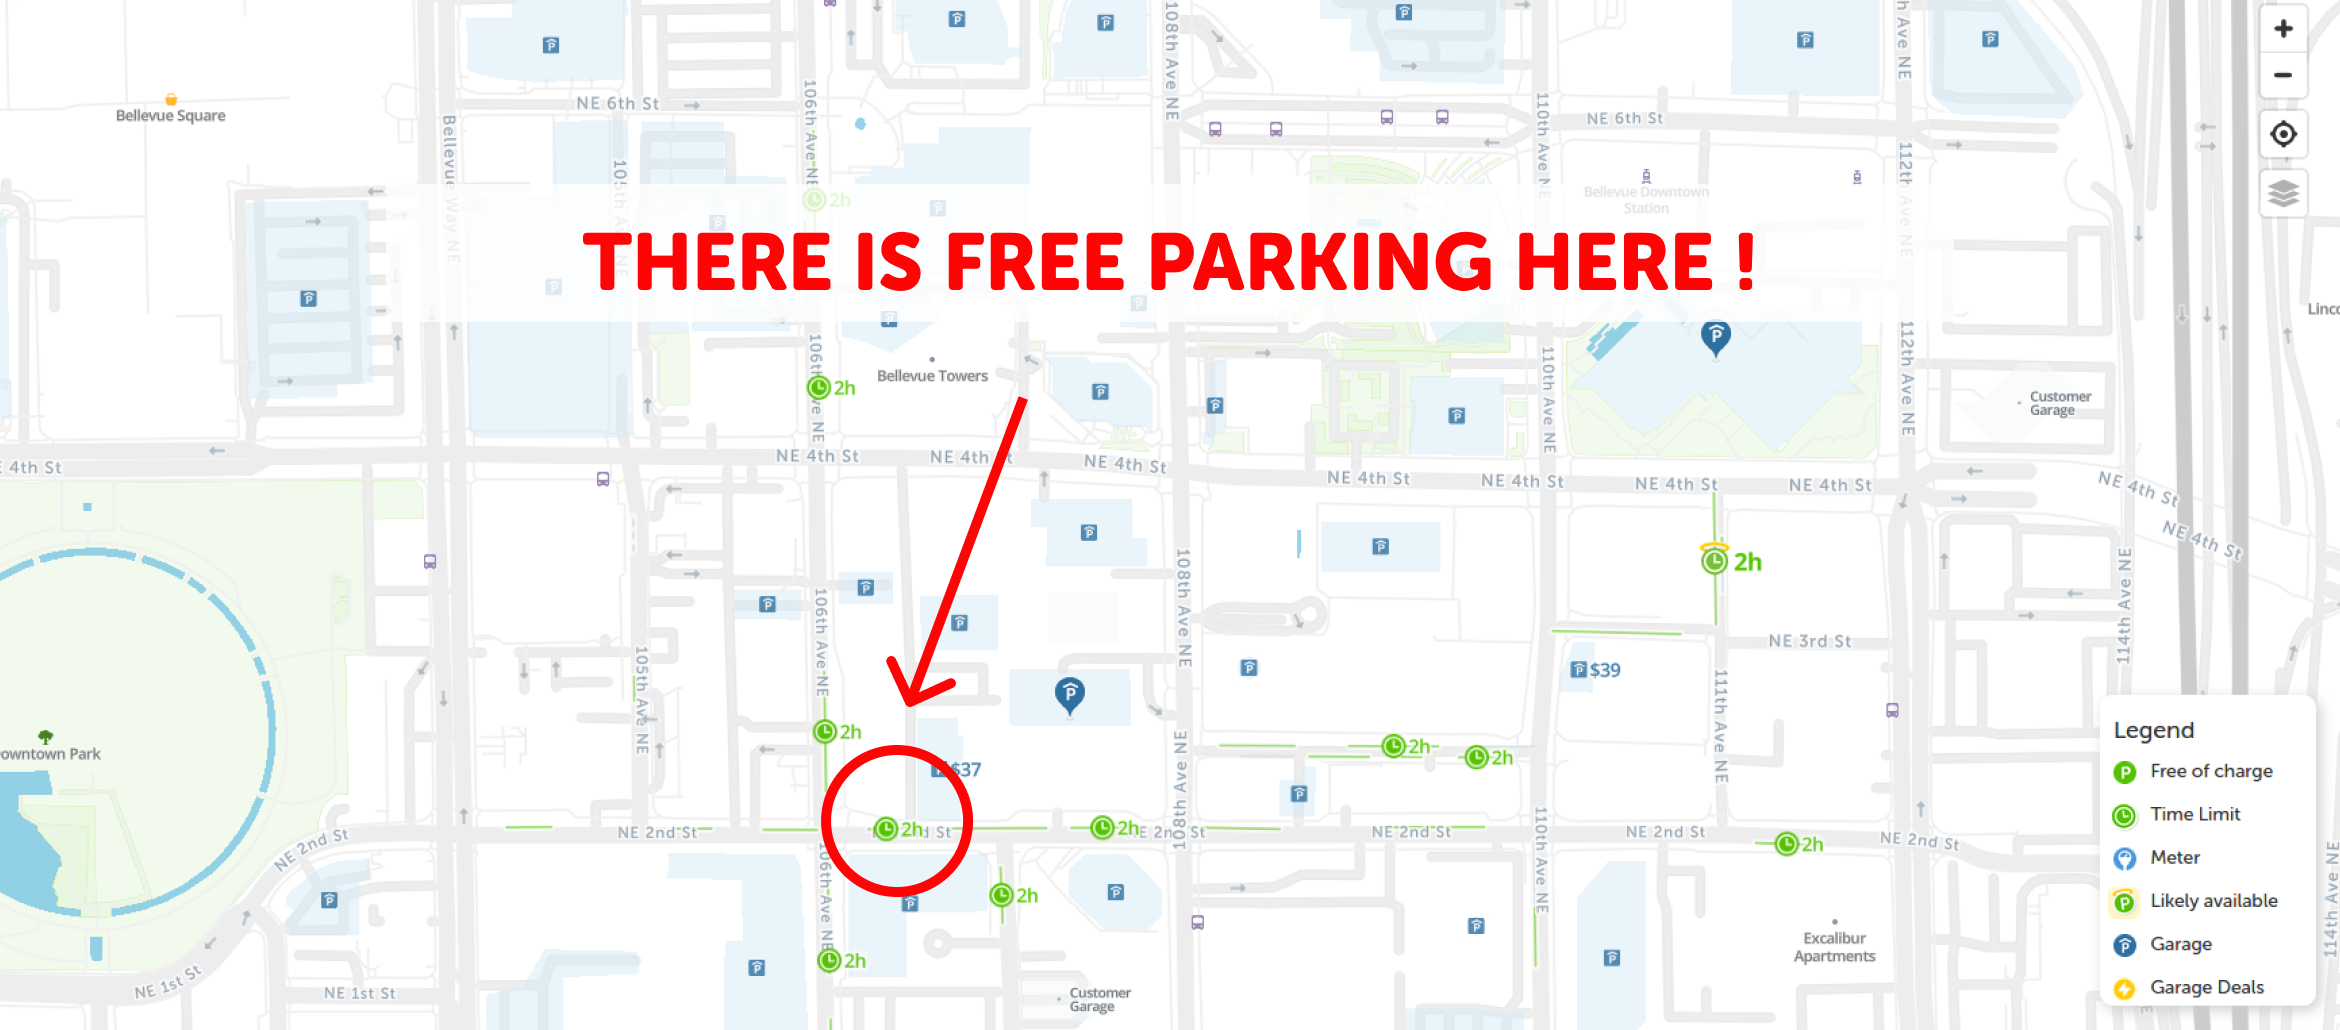 map of free parking in Bellevue - SpotAngels